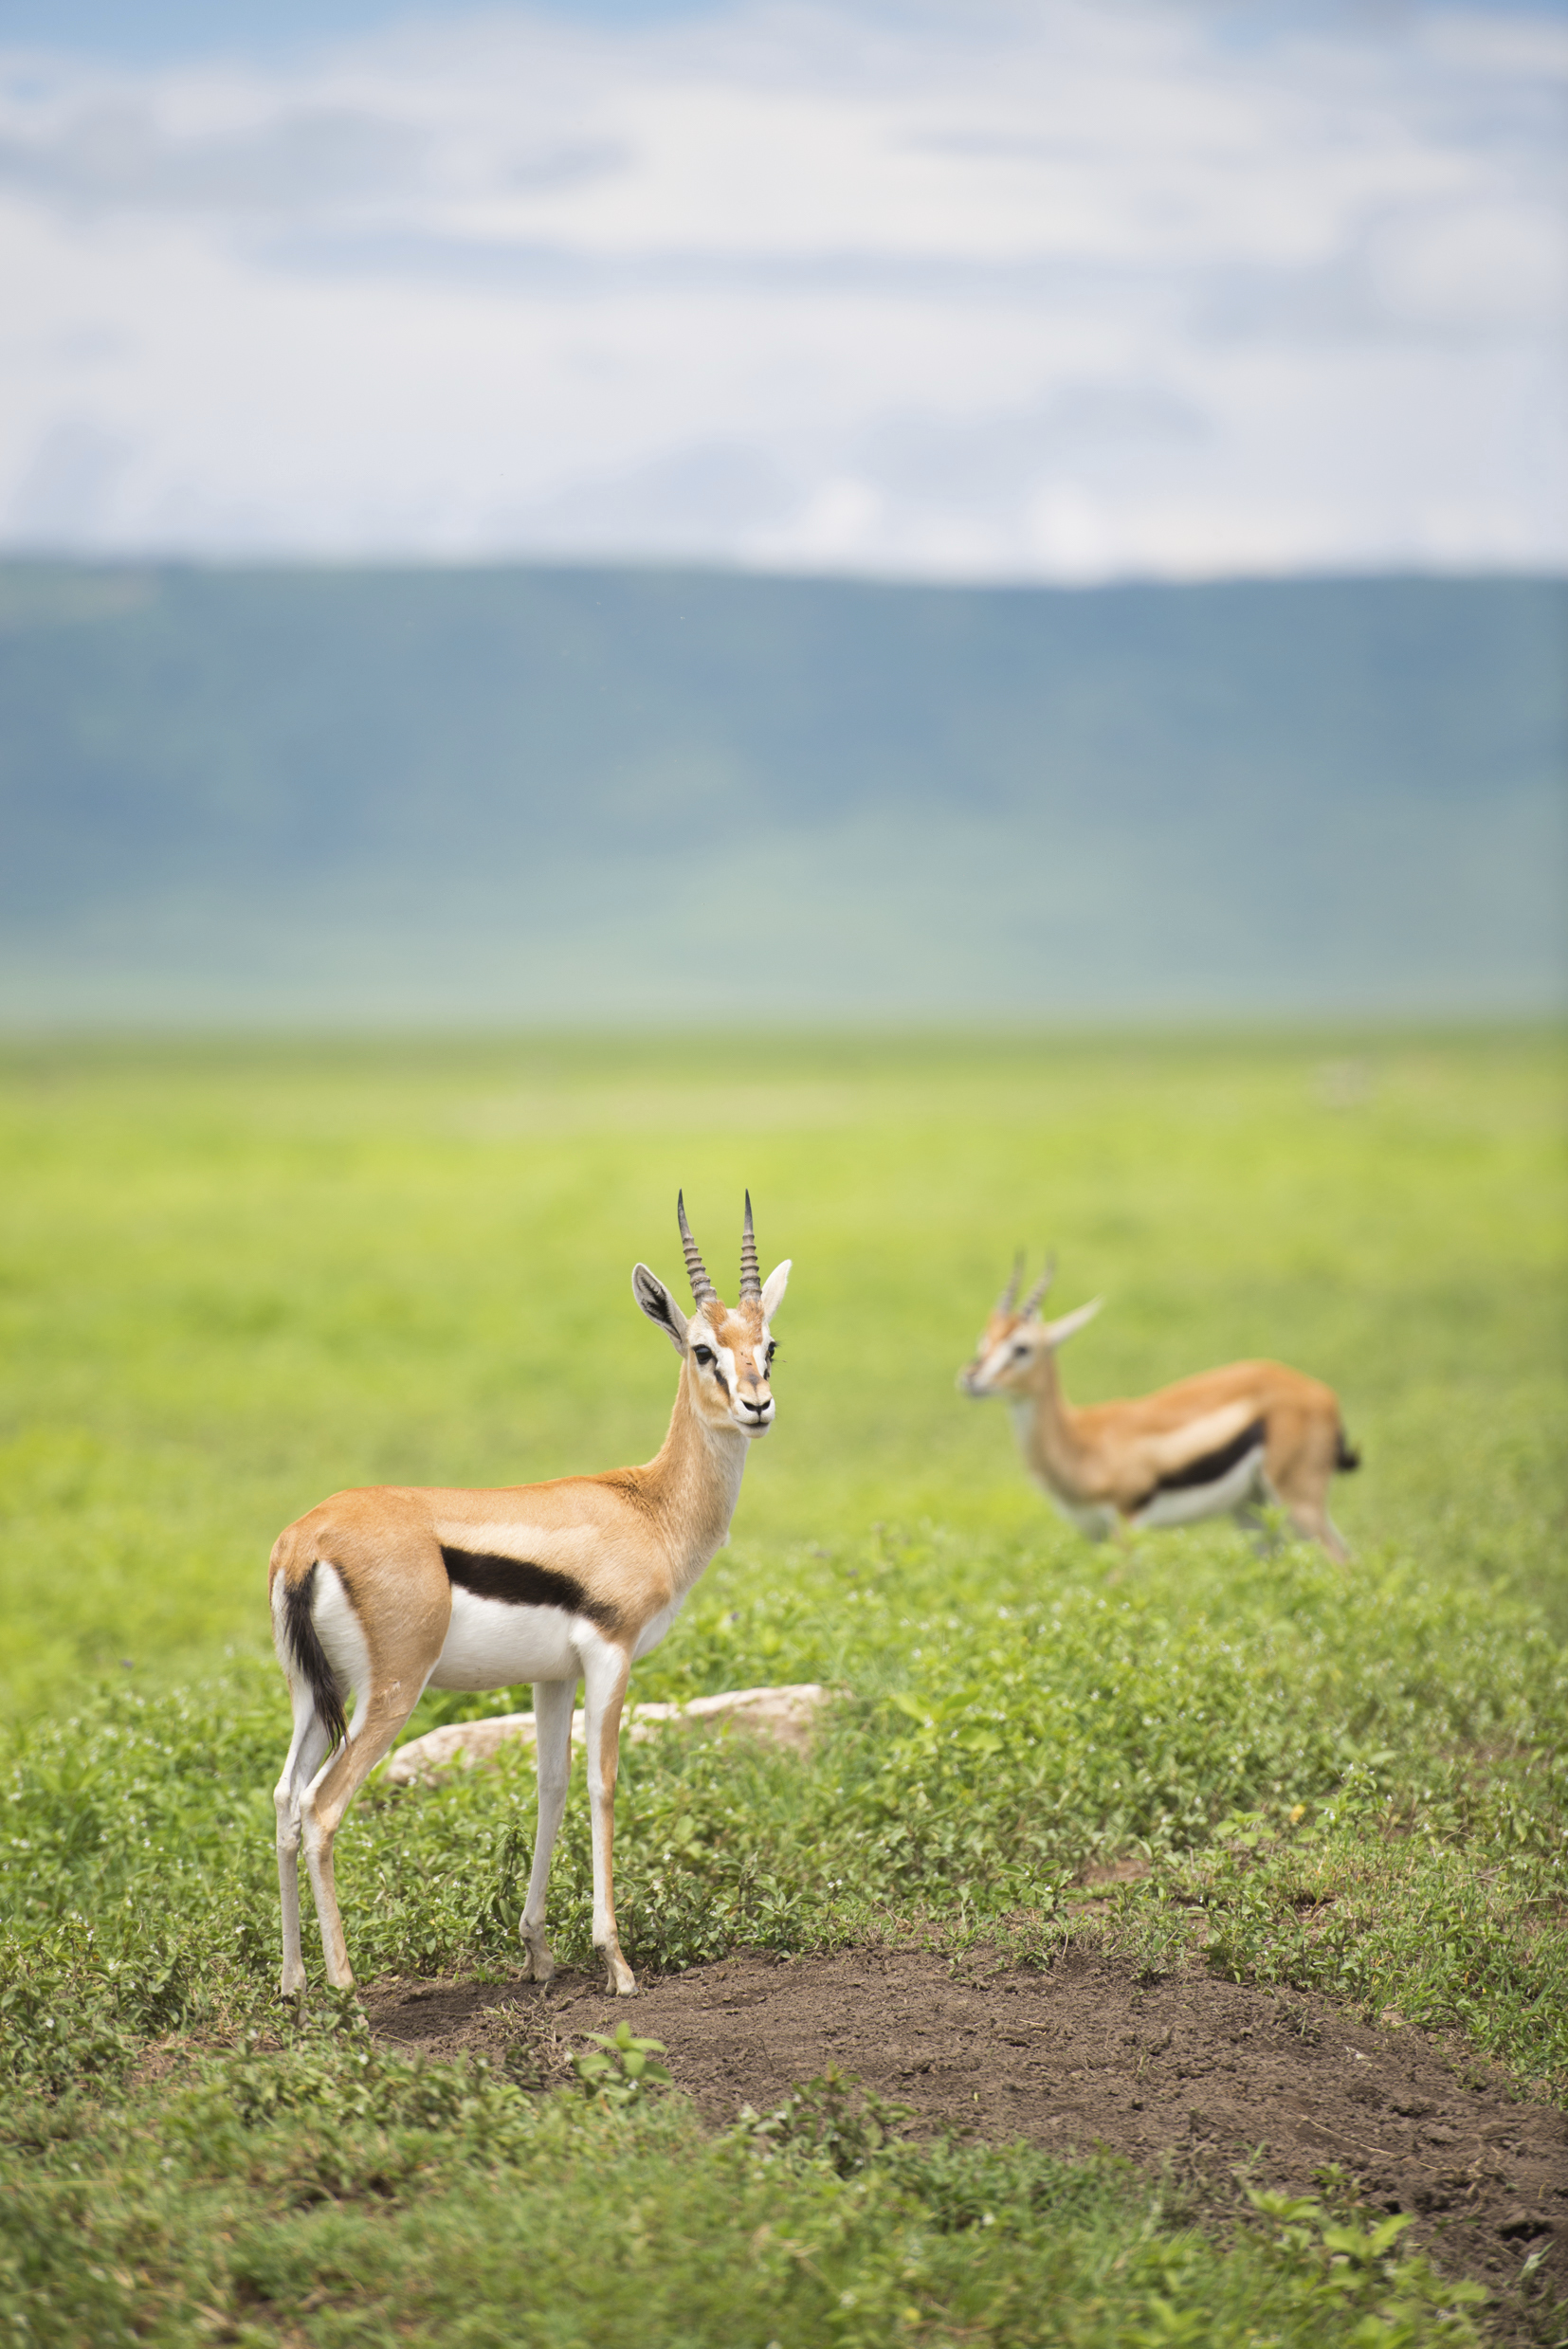 Thompson's Gazelles in Ngorongoro Crater Tanzania, Africa. From iStock Photo